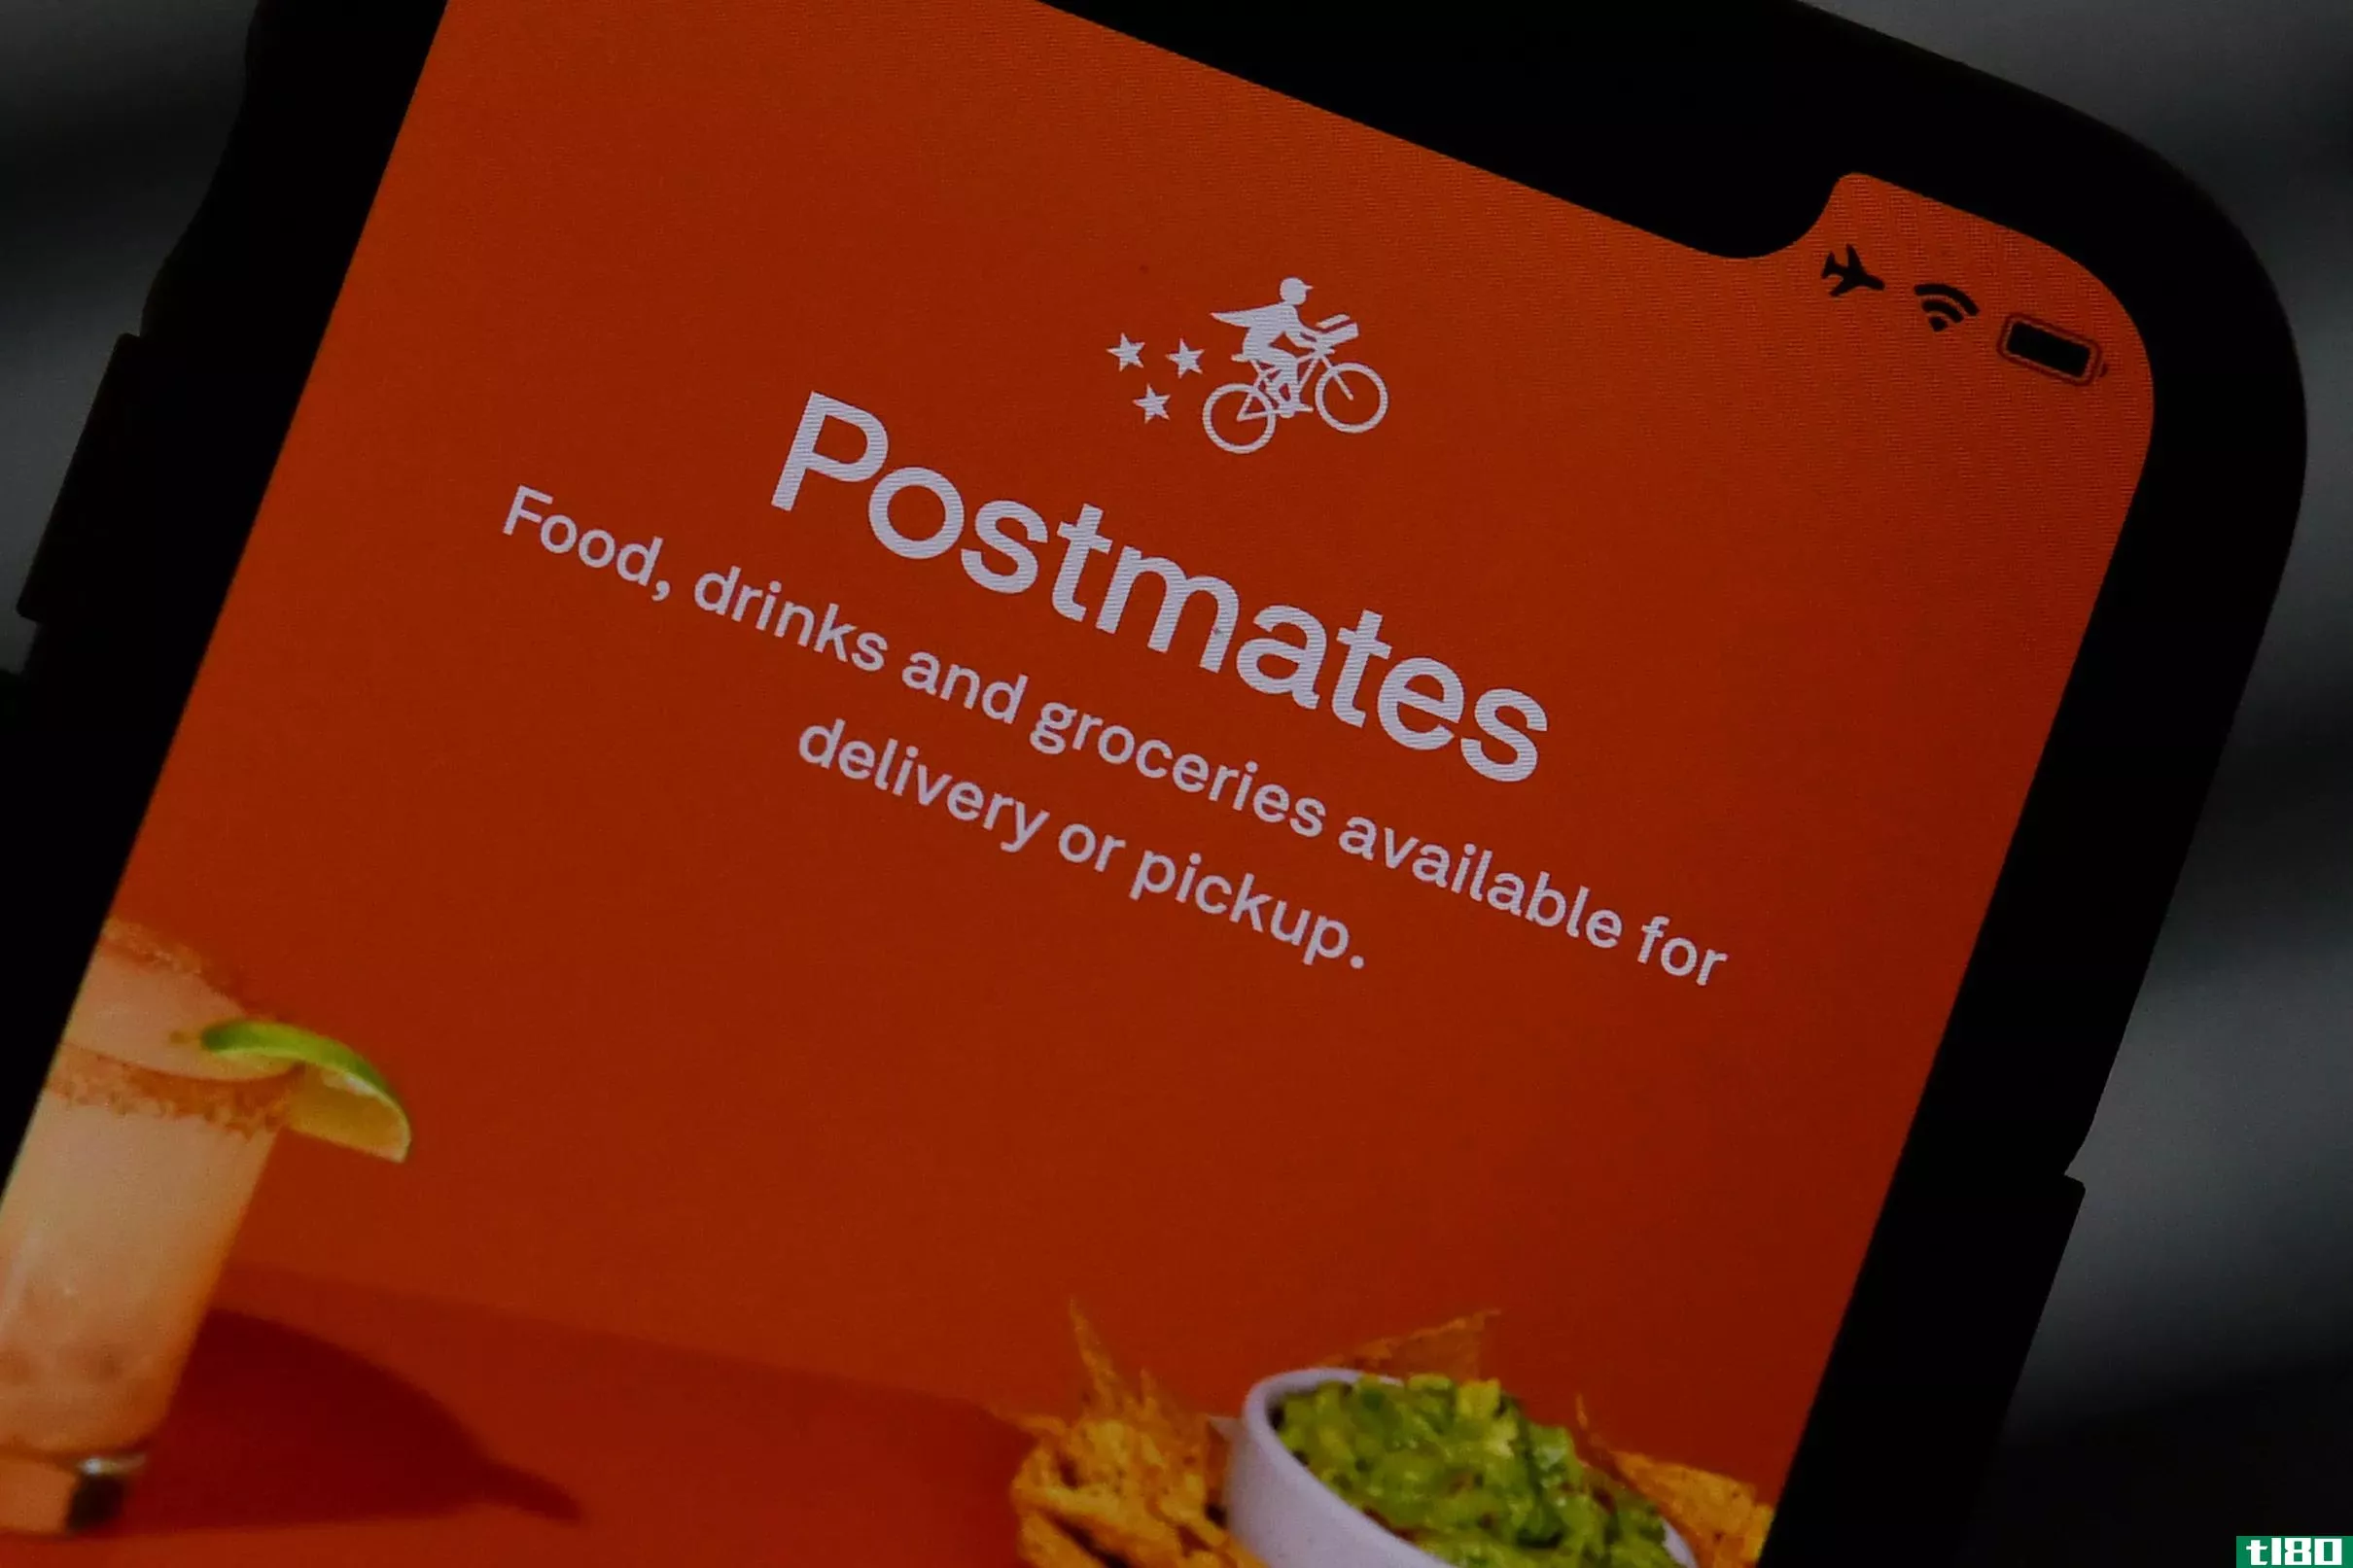 uber以26.5亿美元收购送餐服务postmates